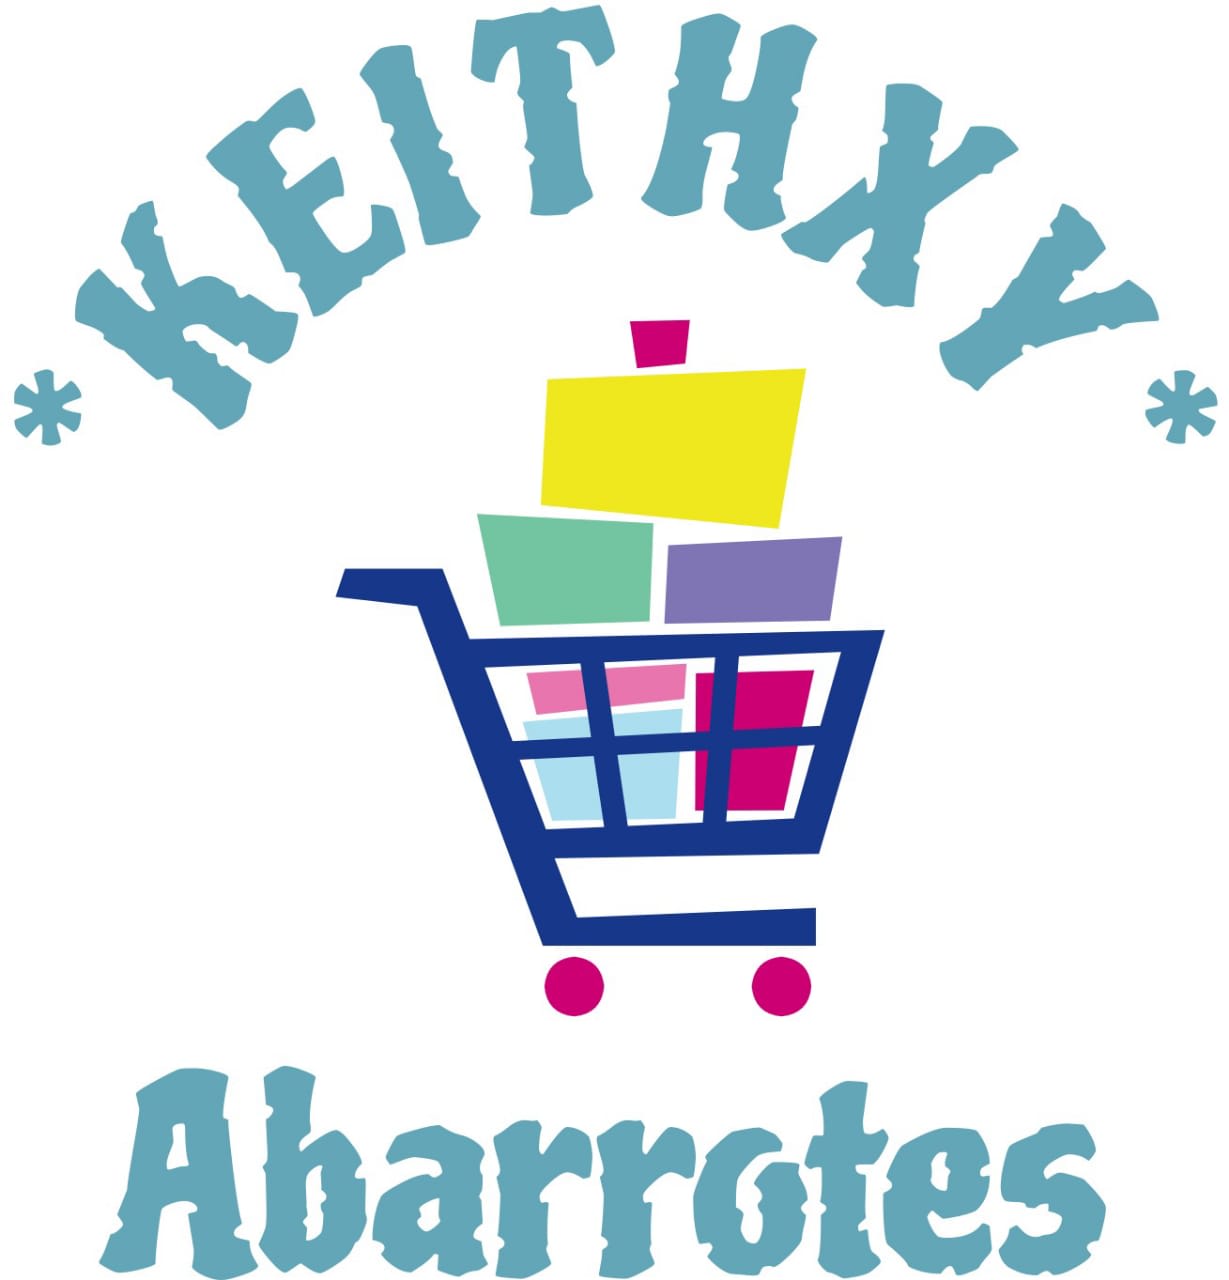 Keithxy Abarrotes